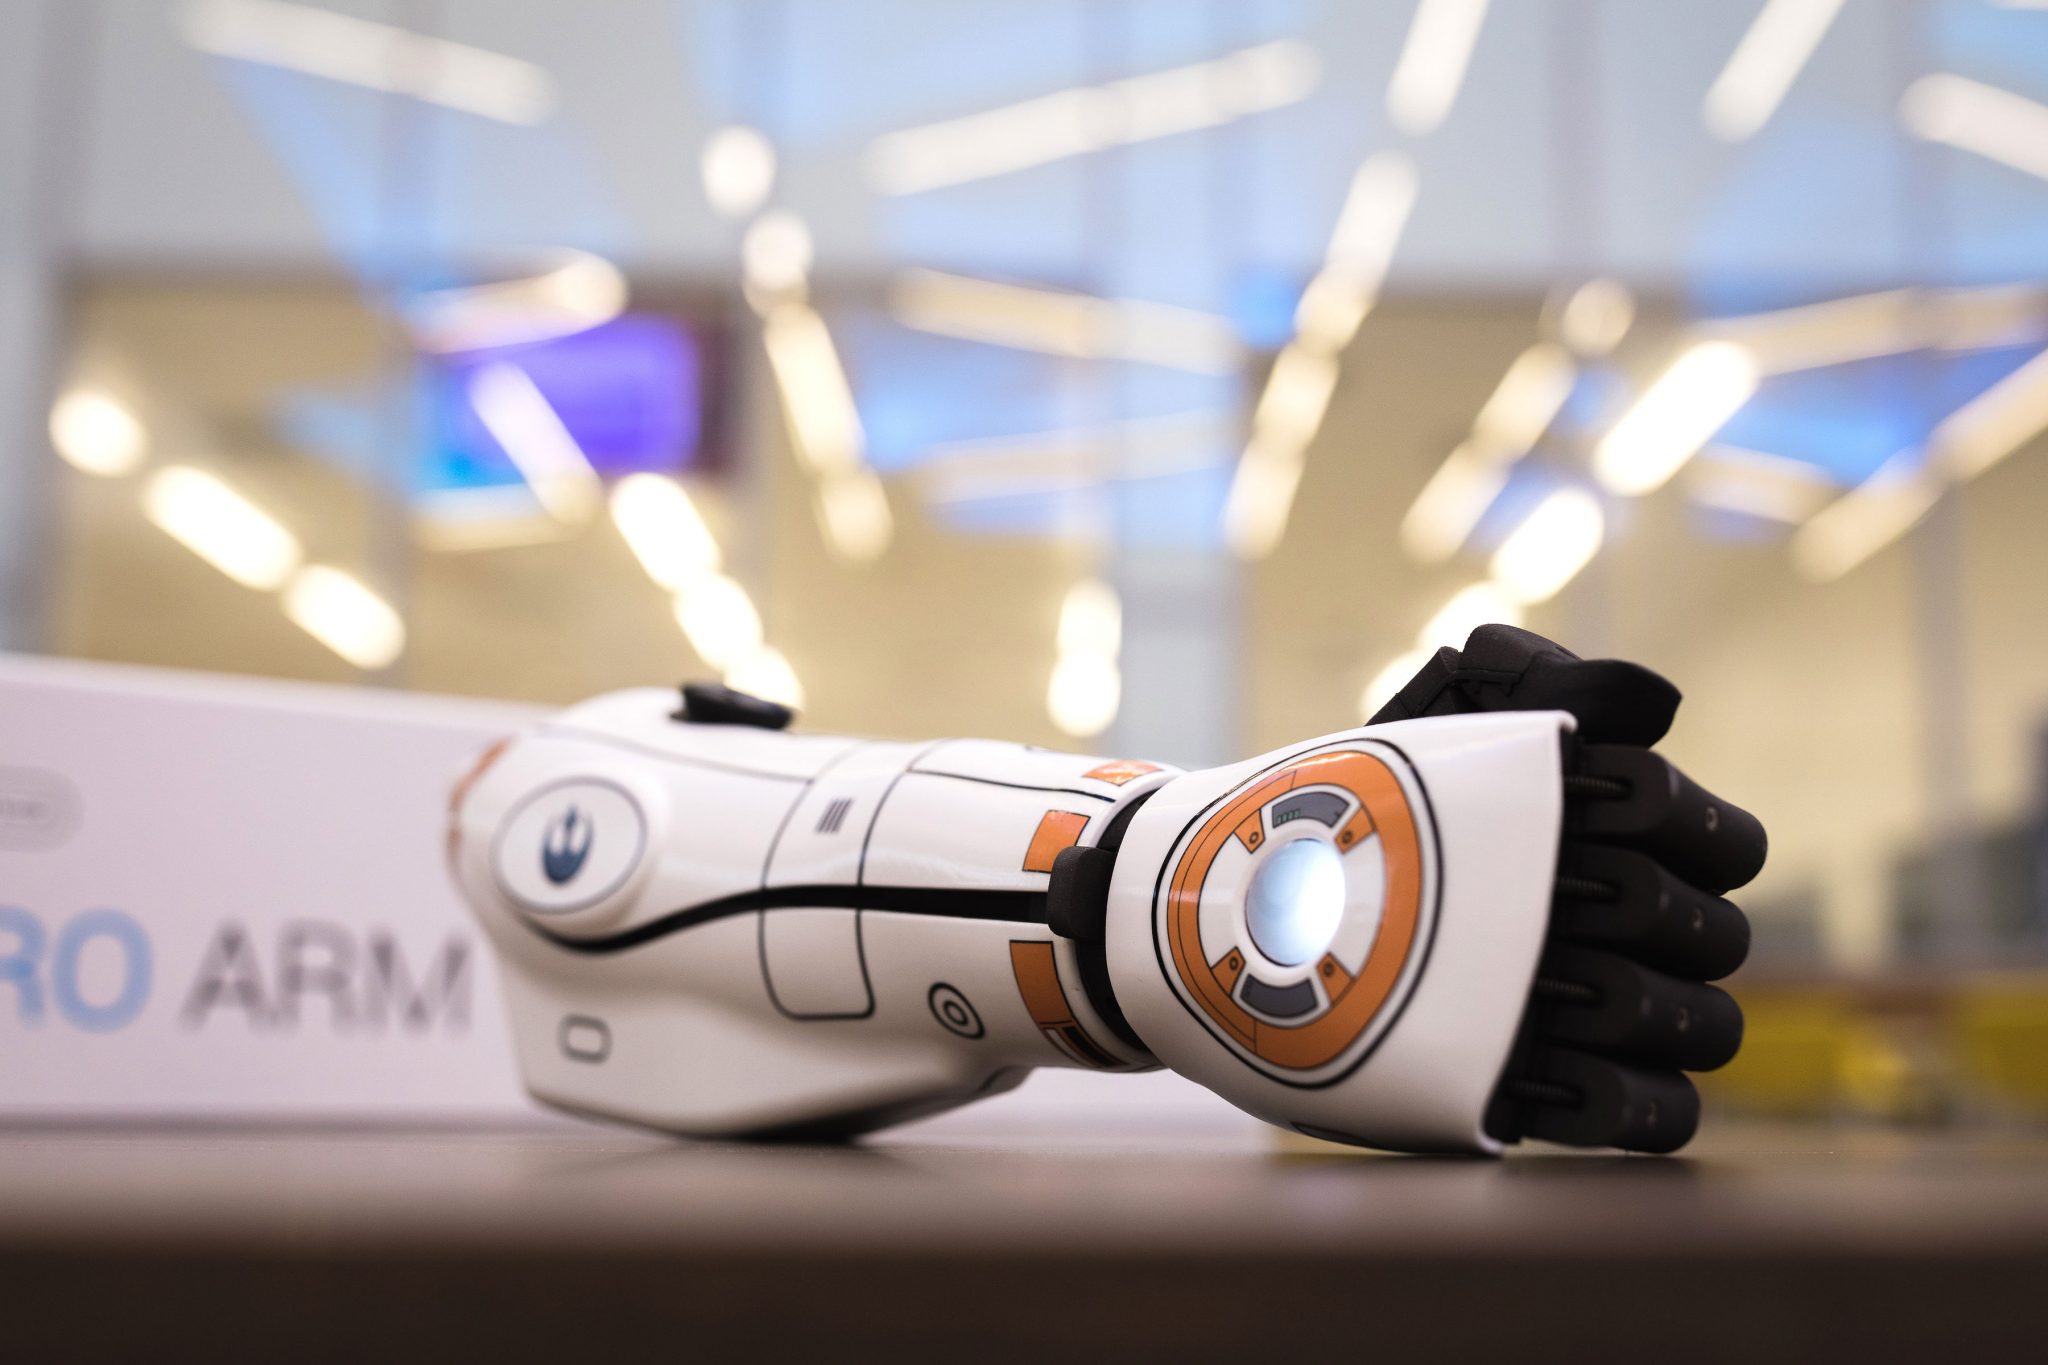 Open Bionics raises 5.9 million to make affordable 3D printed bionic